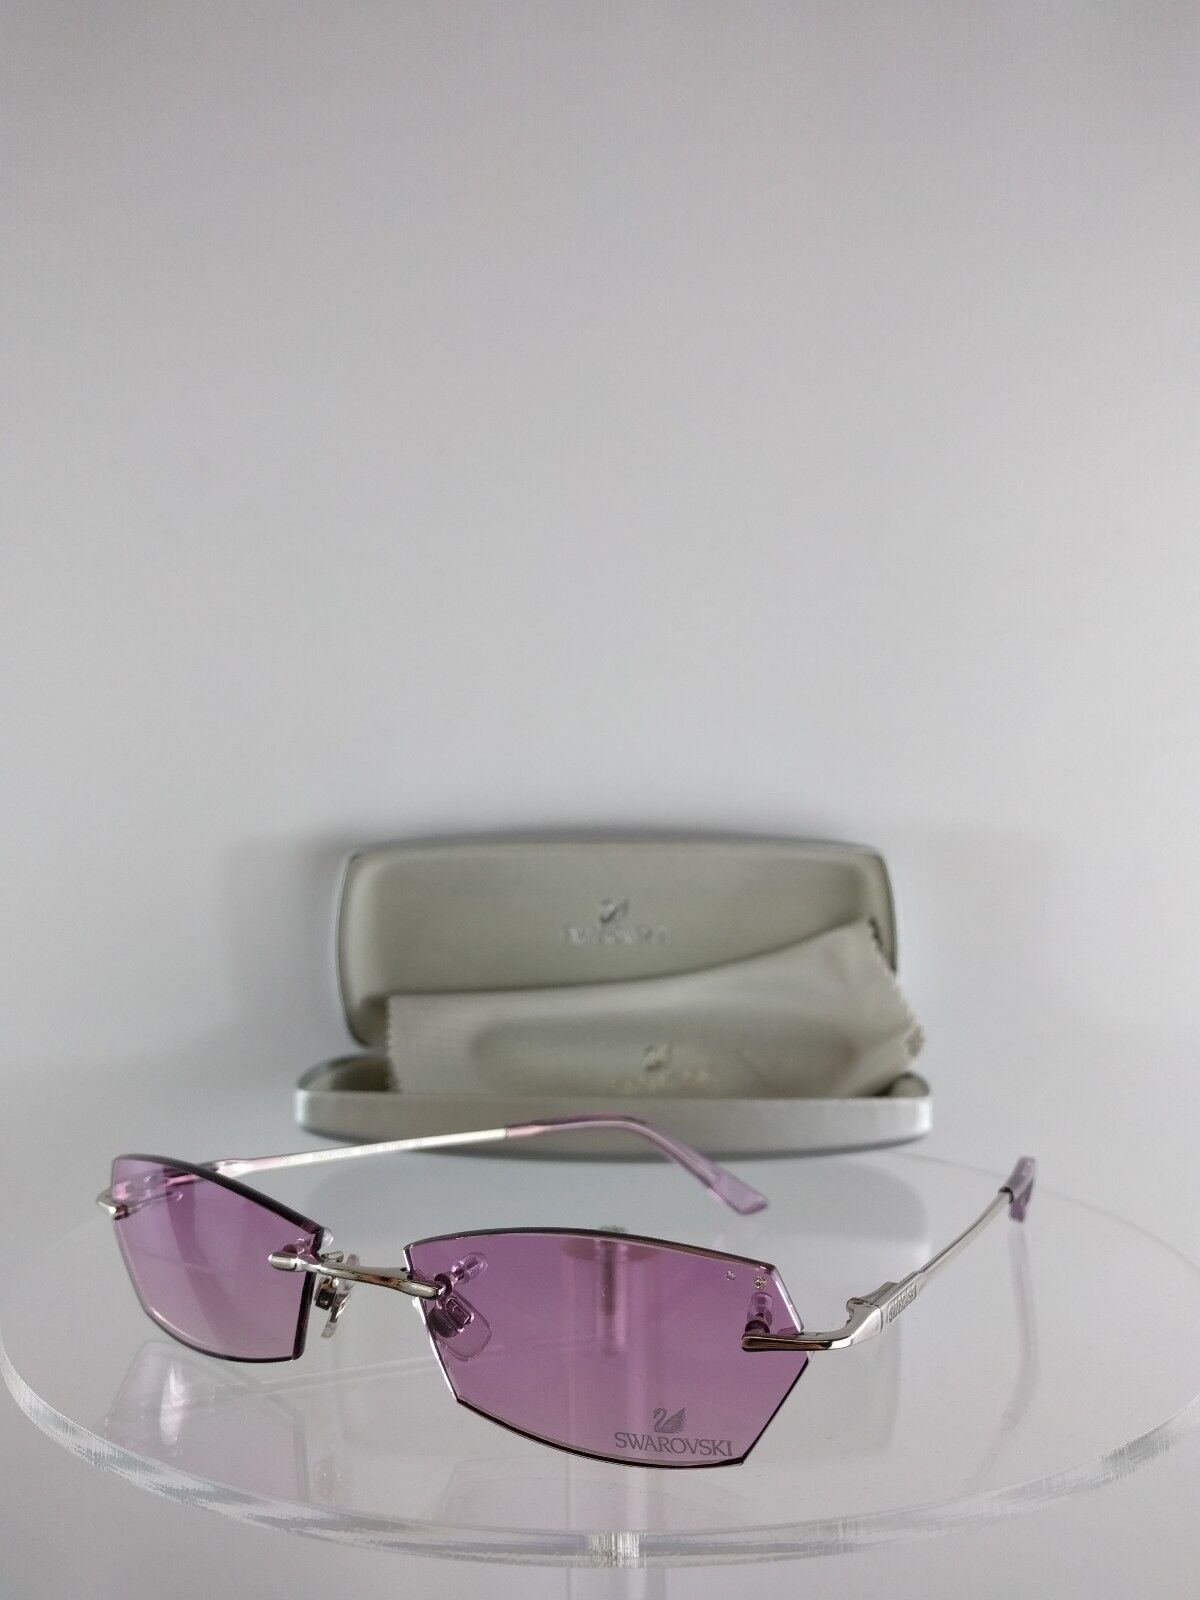 Brand New Authentic Swarovski Sunglasses AIR SW 5015 16A Violet Frame